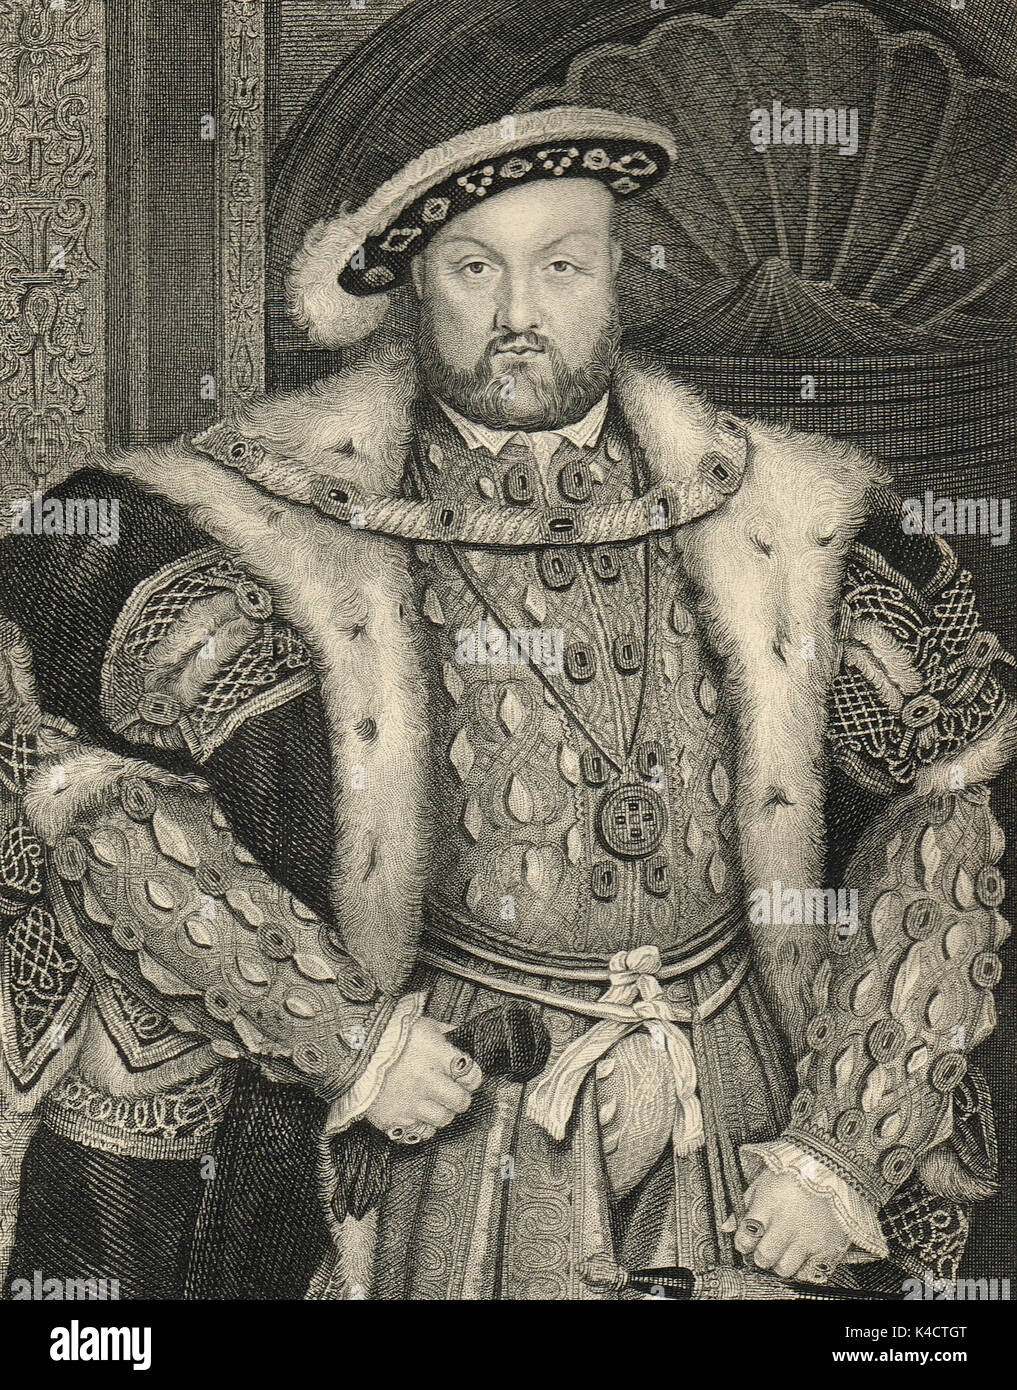 El rey Enrique VIII de Inglaterra, 1491-1547, reinó 1509-1547 Foto de stock